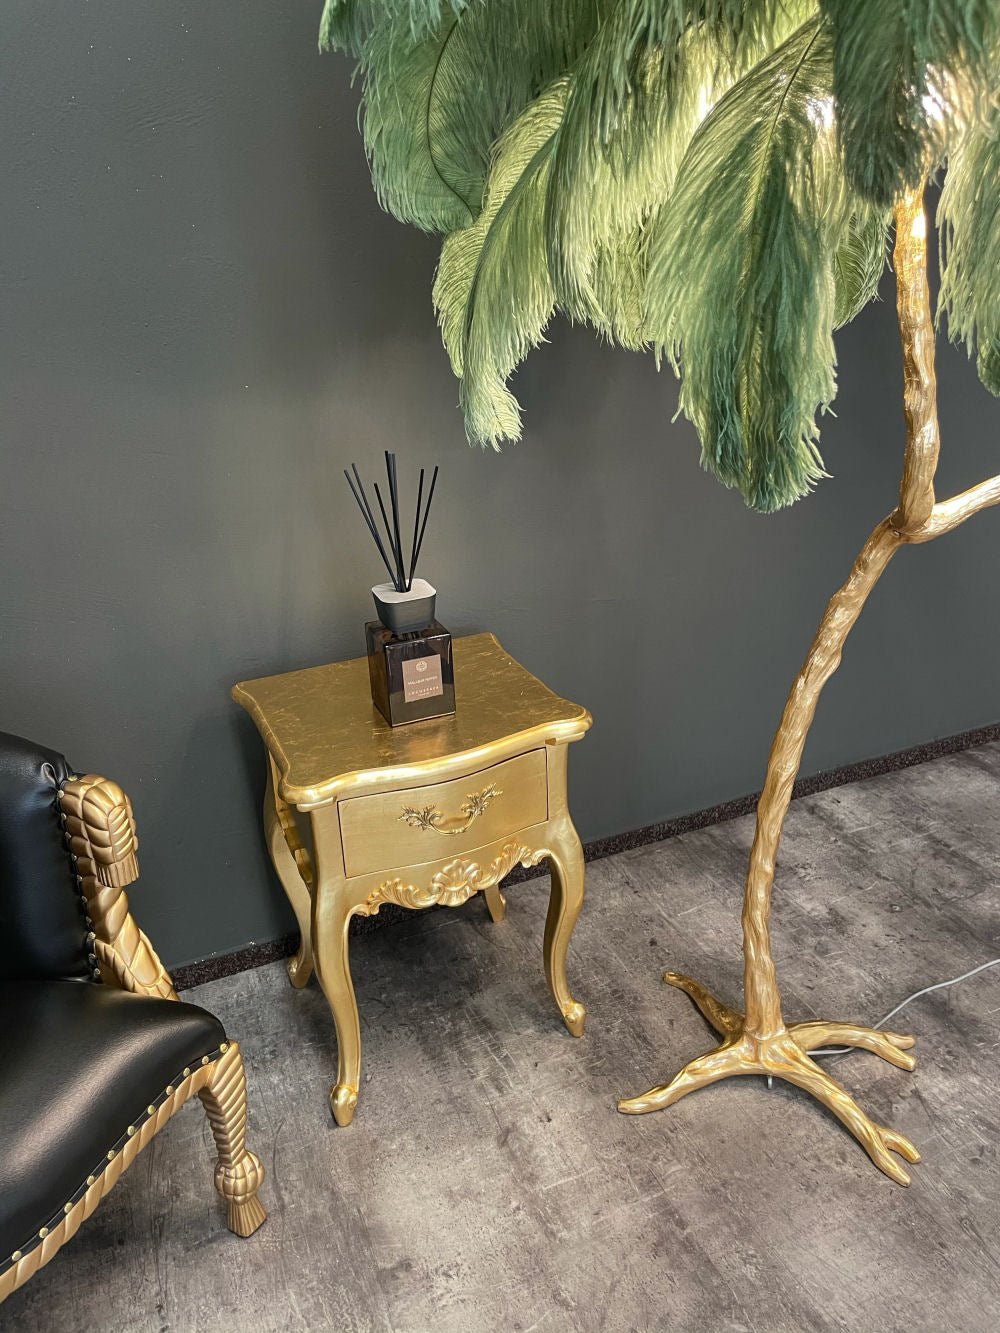 Luxury Floor Feather Lamp - Palm Green - |VESIMI Design| Luxury and Rustic bathrooms online